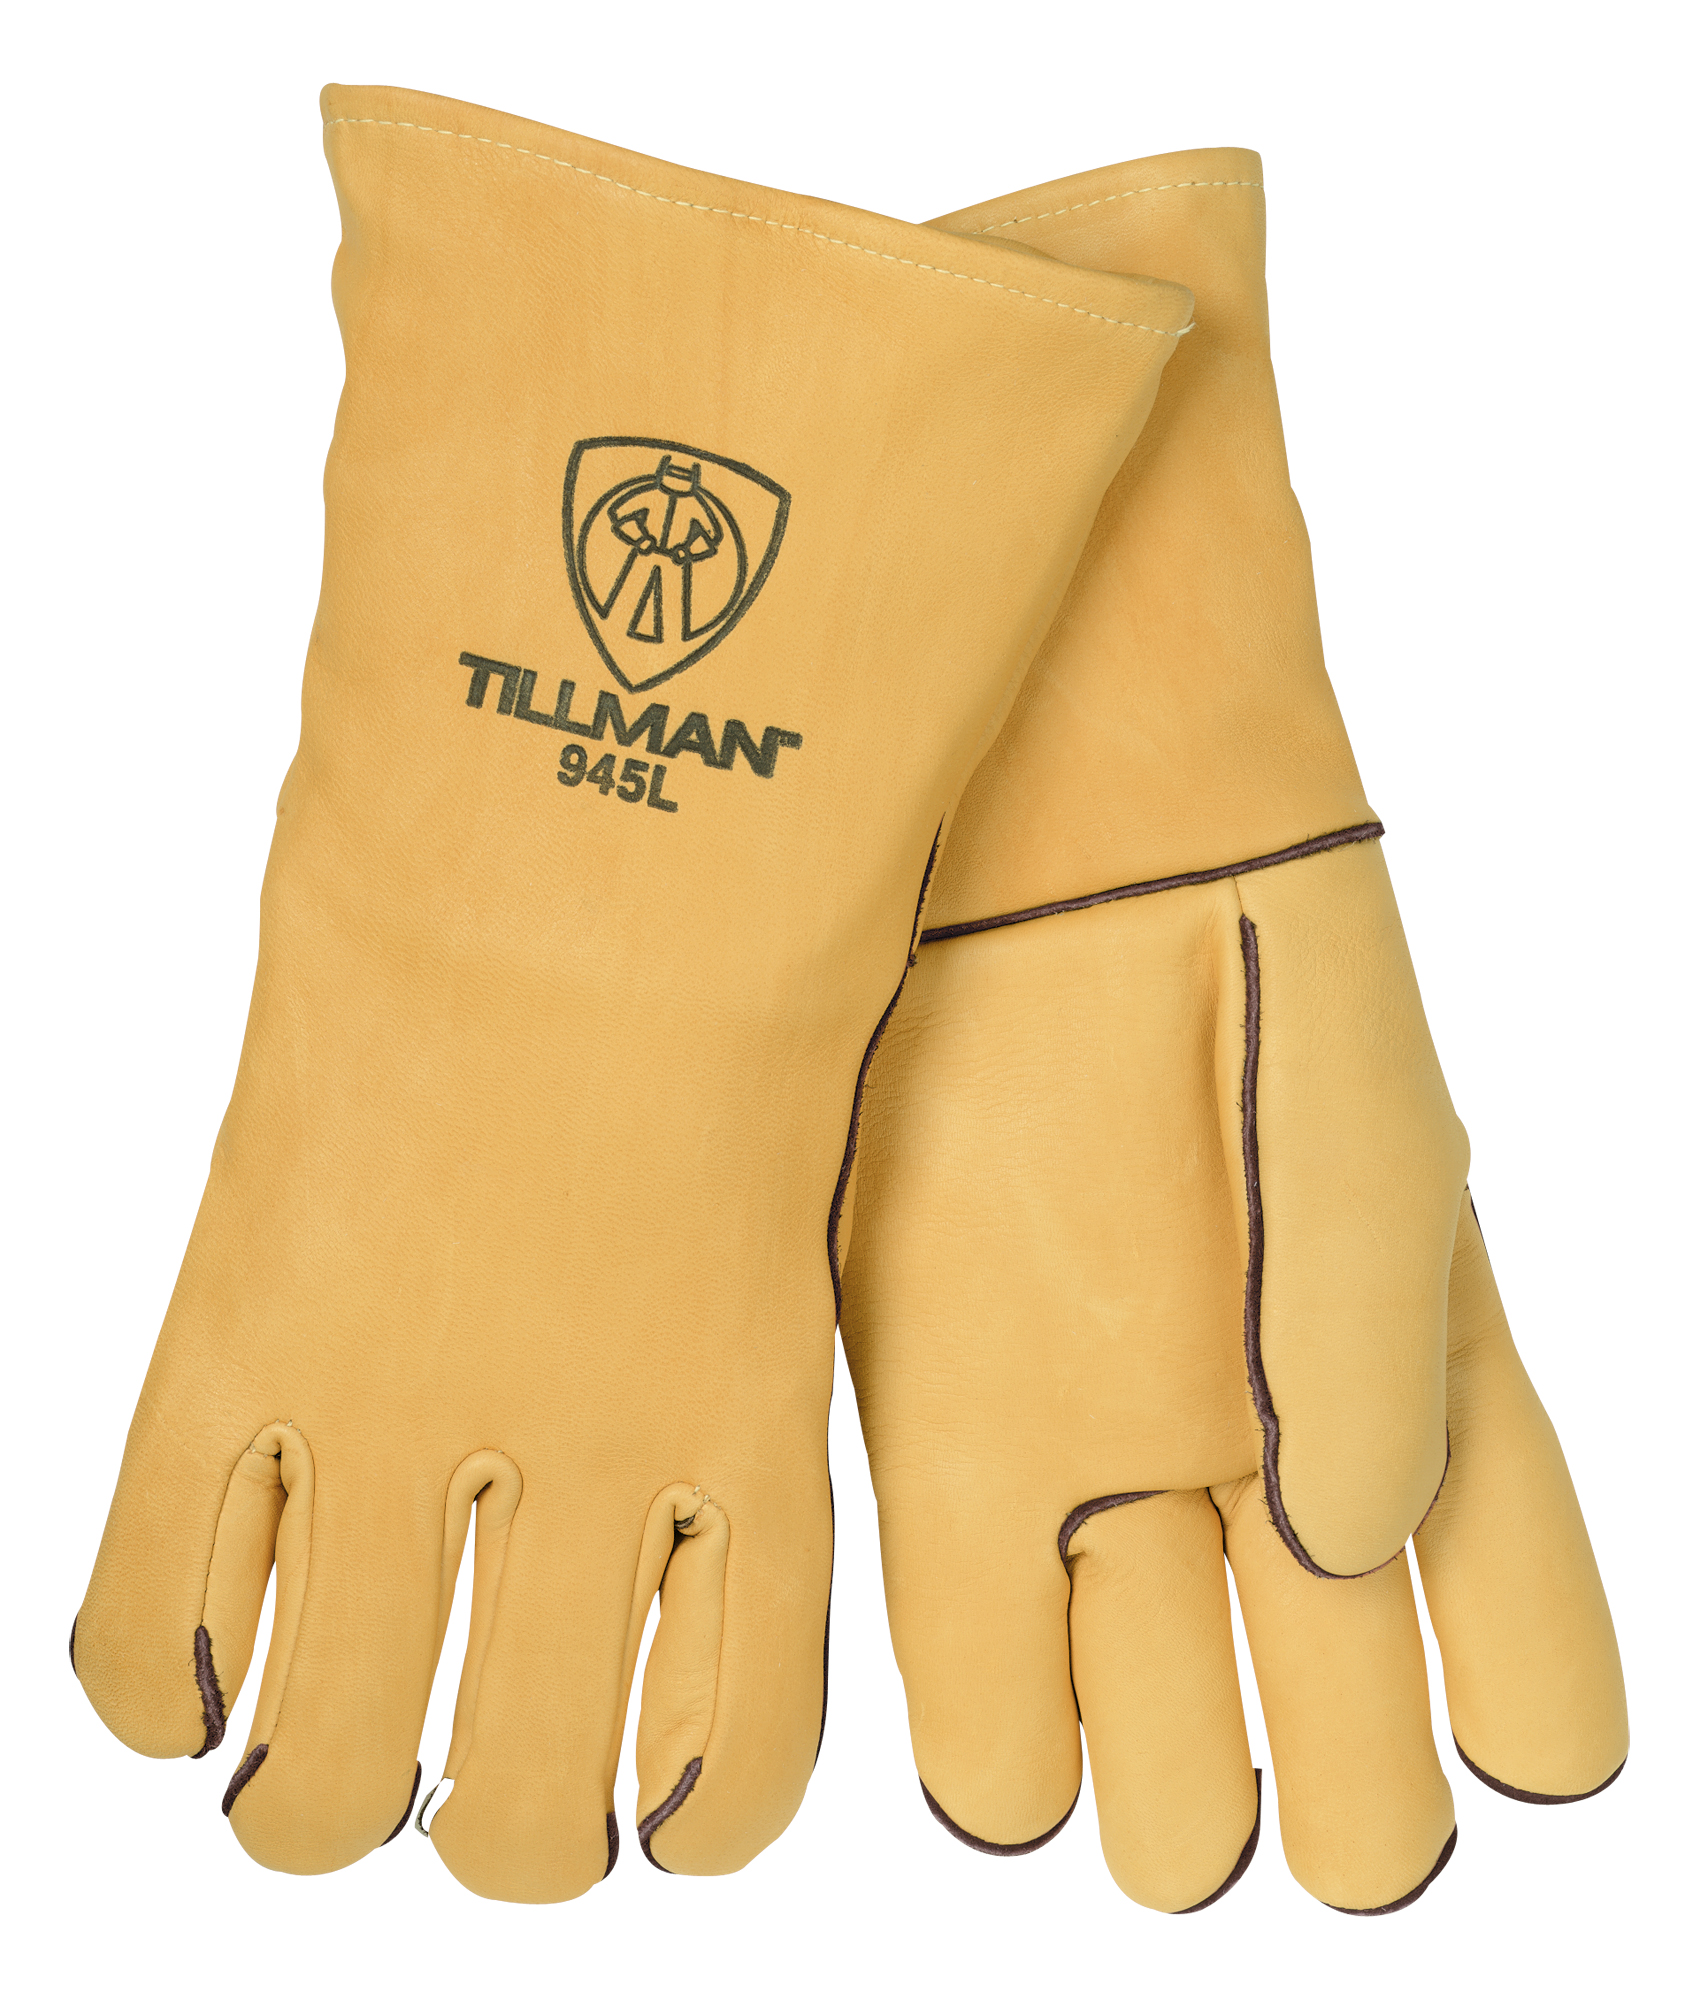 Tillman® Top Grain Elkskin Stick Welding Glove- Size L (6 PR)- Size L (6 PR)